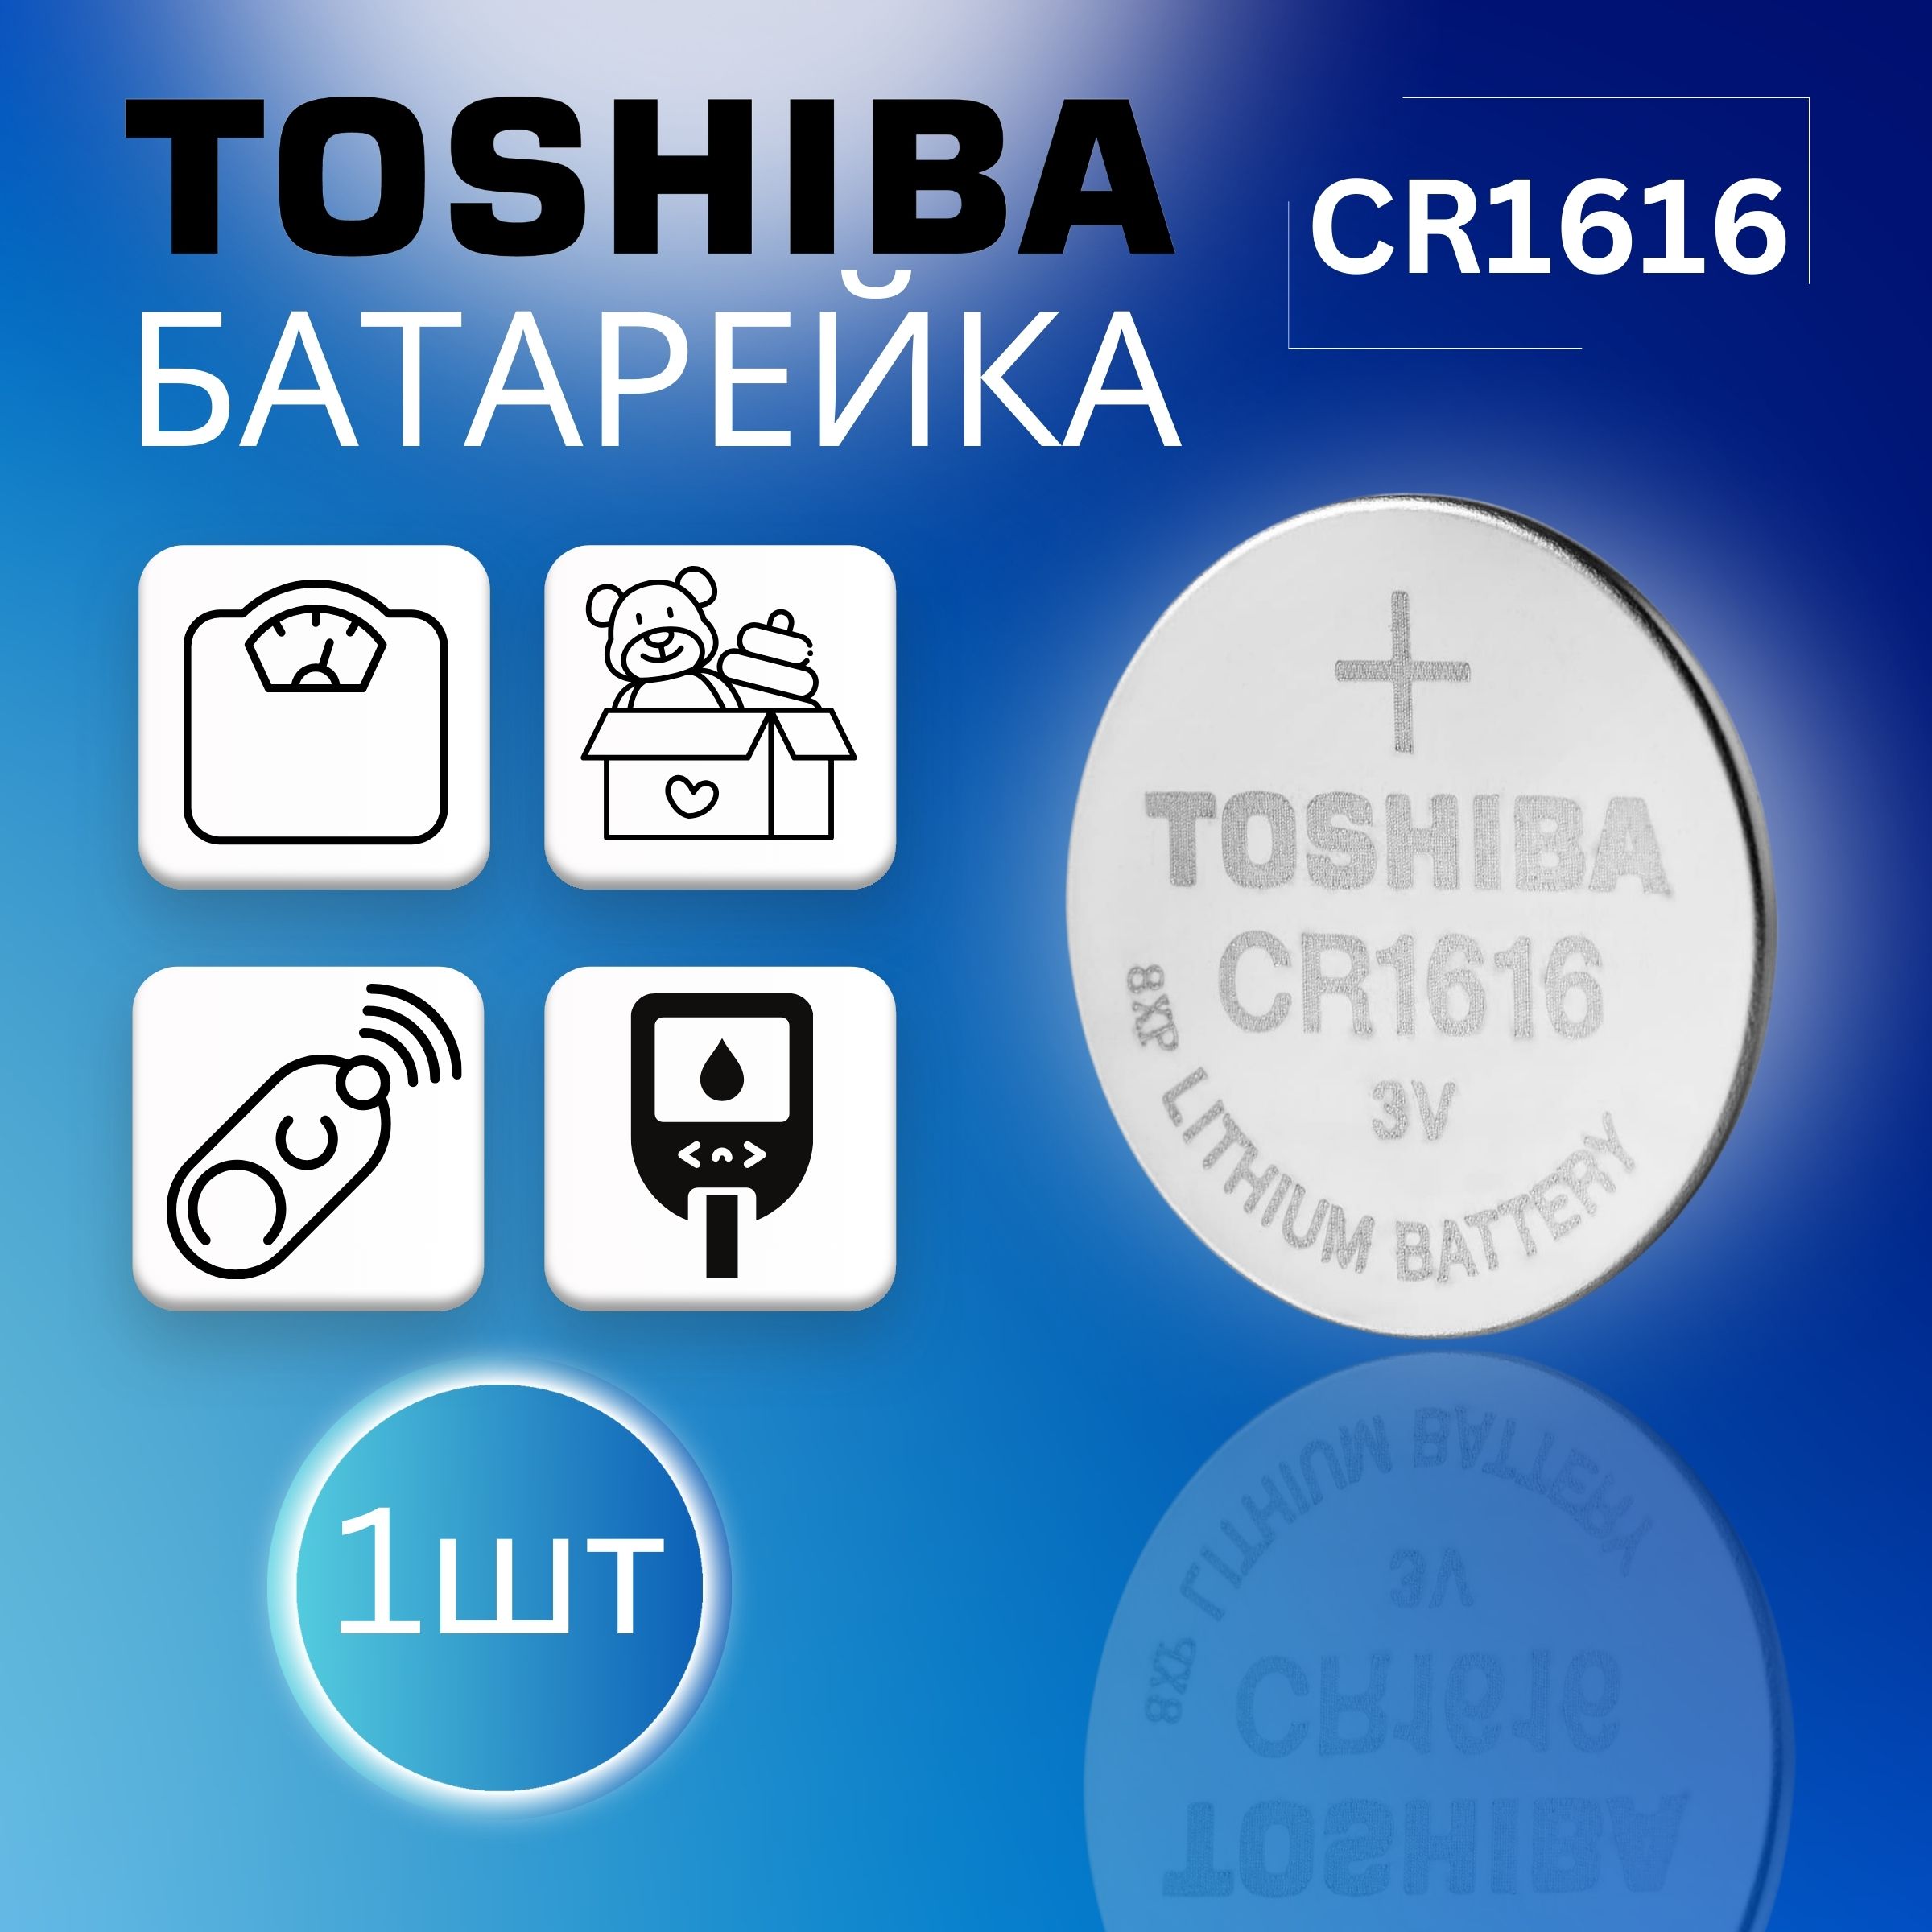 ToshibaБатарейкаCR1616,Литиевыйтип,3В,1шт